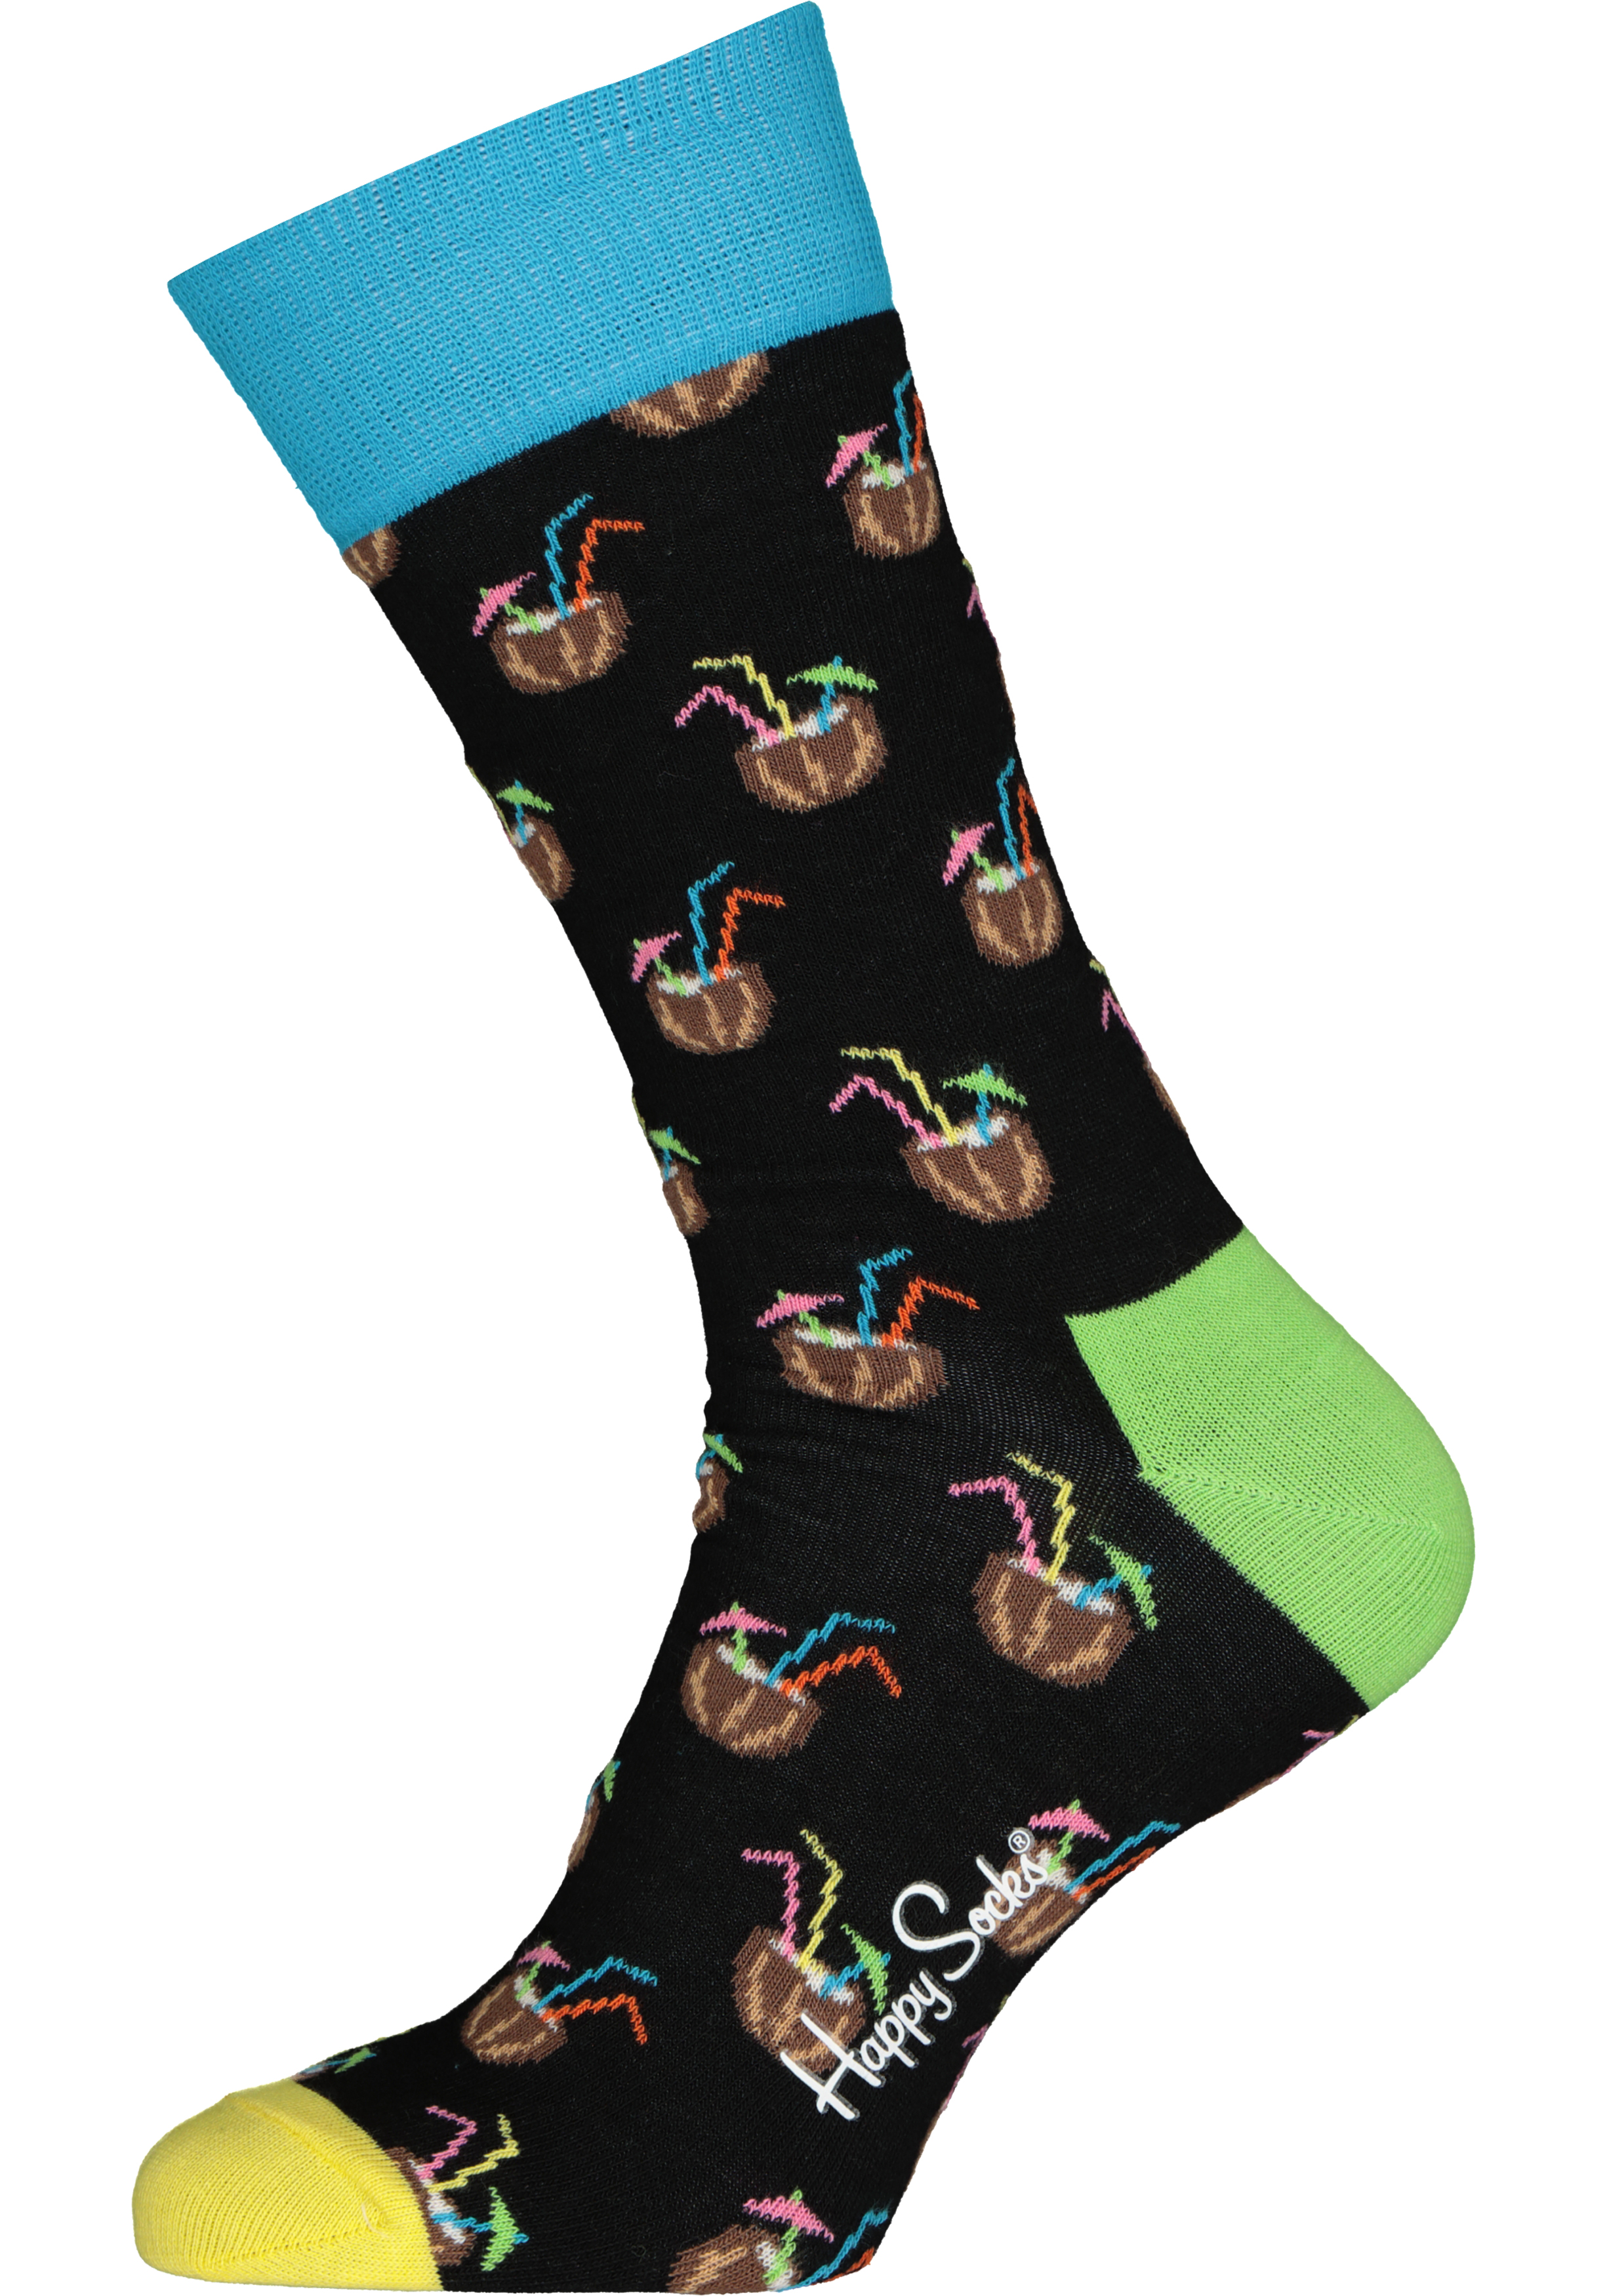 Happy Socks Cocunut Cocktail Sock, unisex sokken